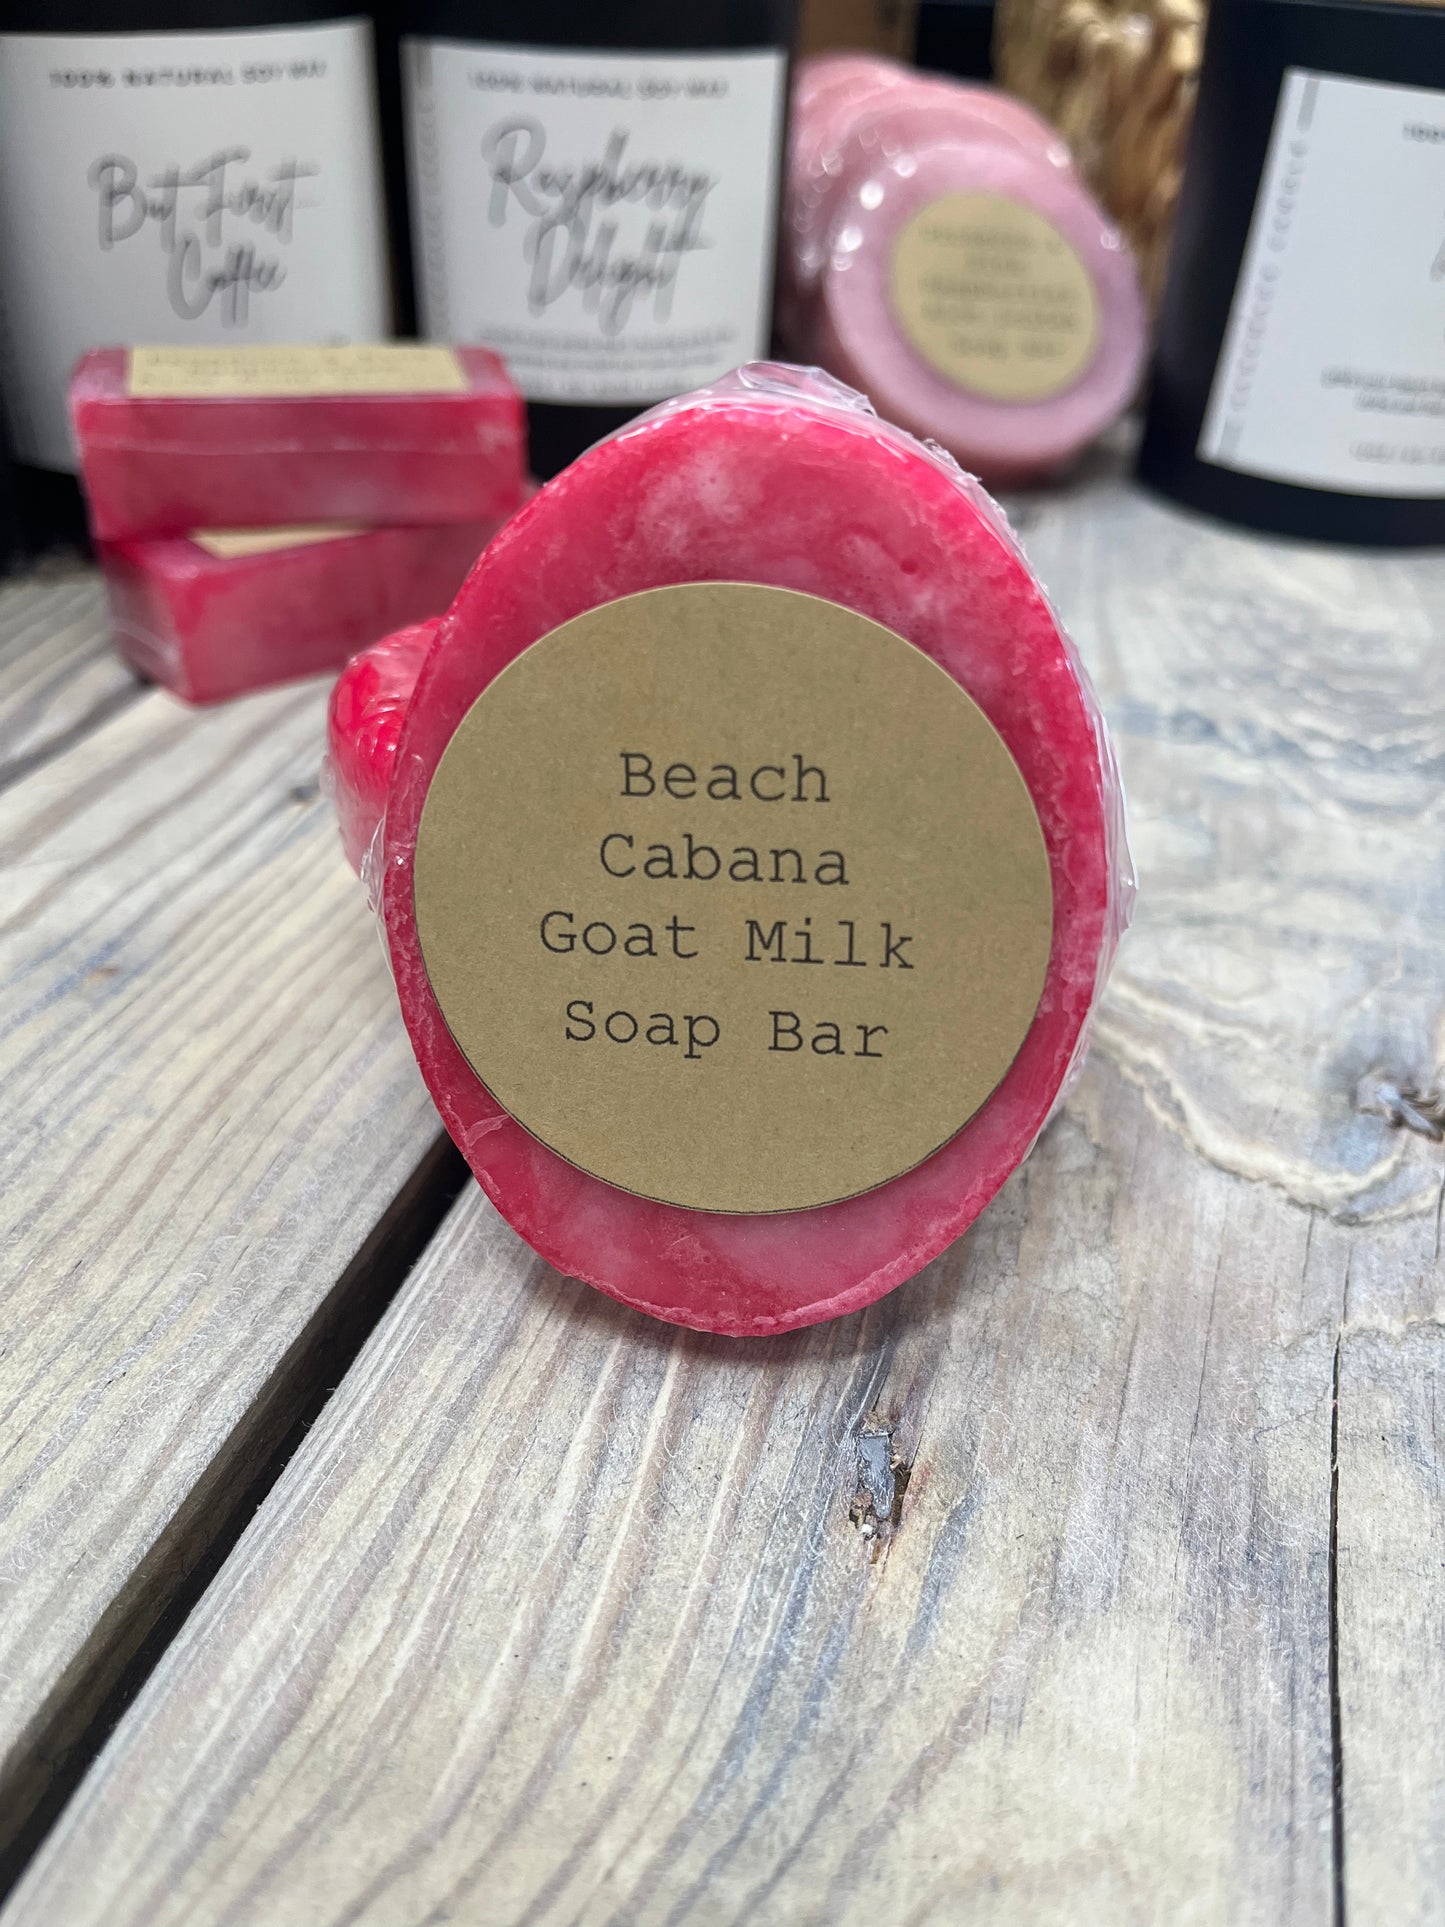 Goat Milk Soap Bars - Handmade in Michigan - Variety of Scents